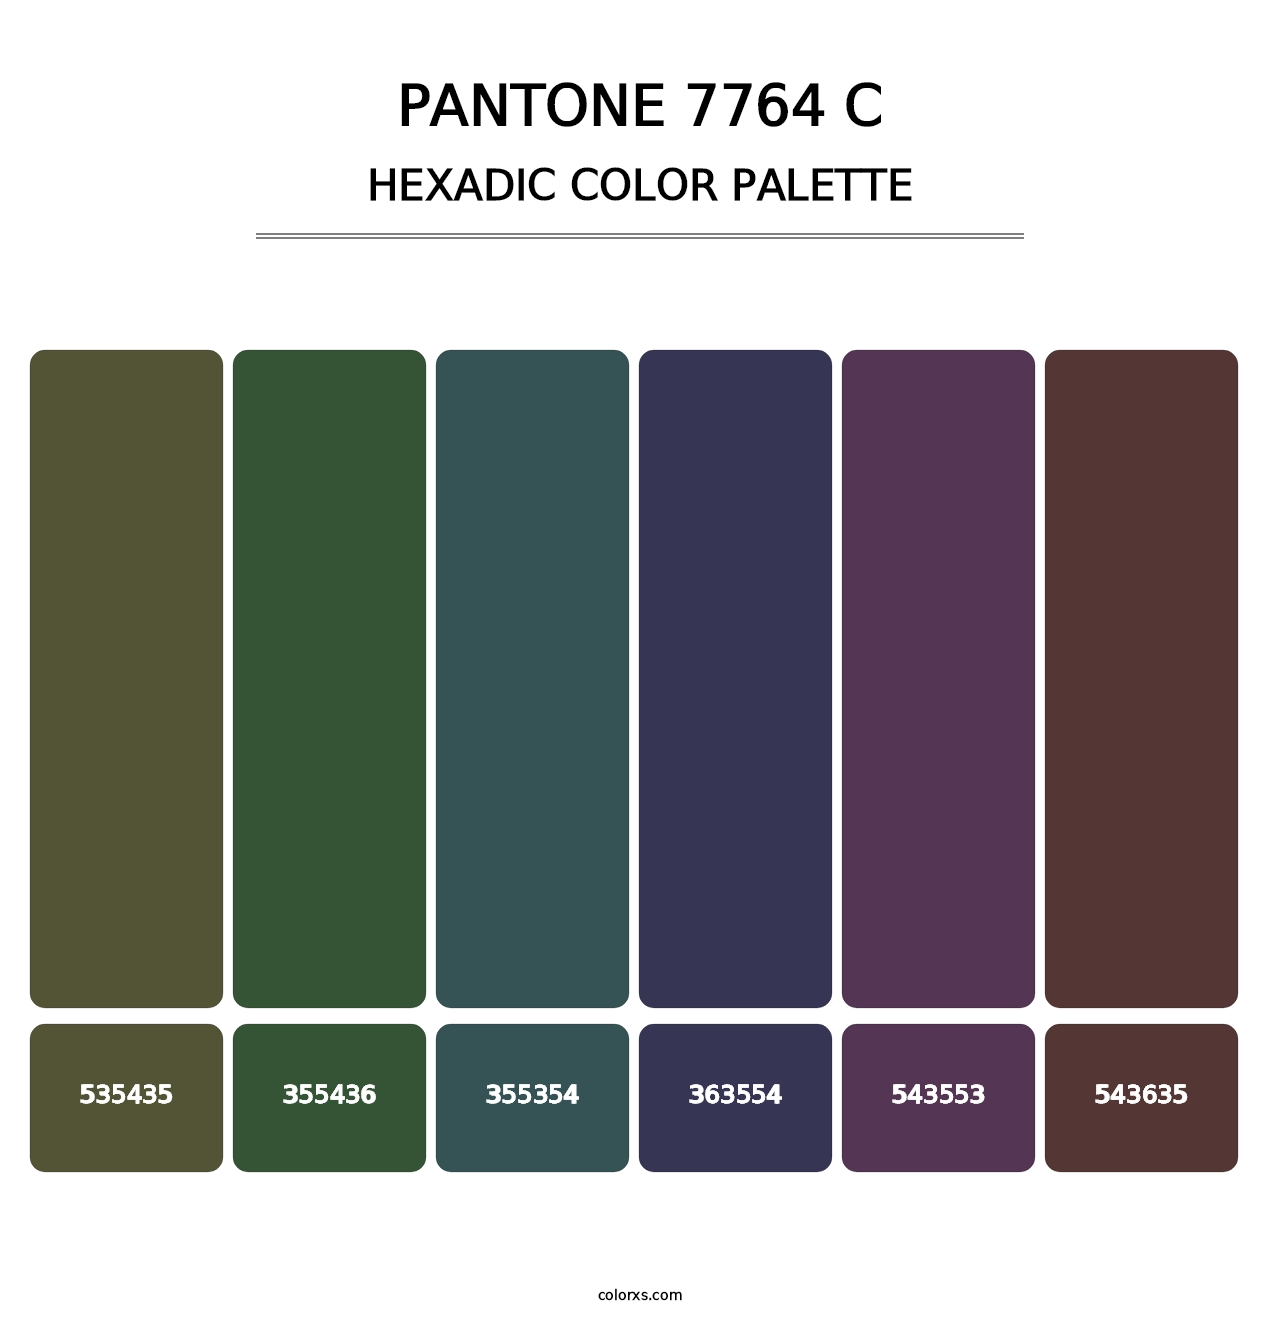 PANTONE 7764 C - Hexadic Color Palette